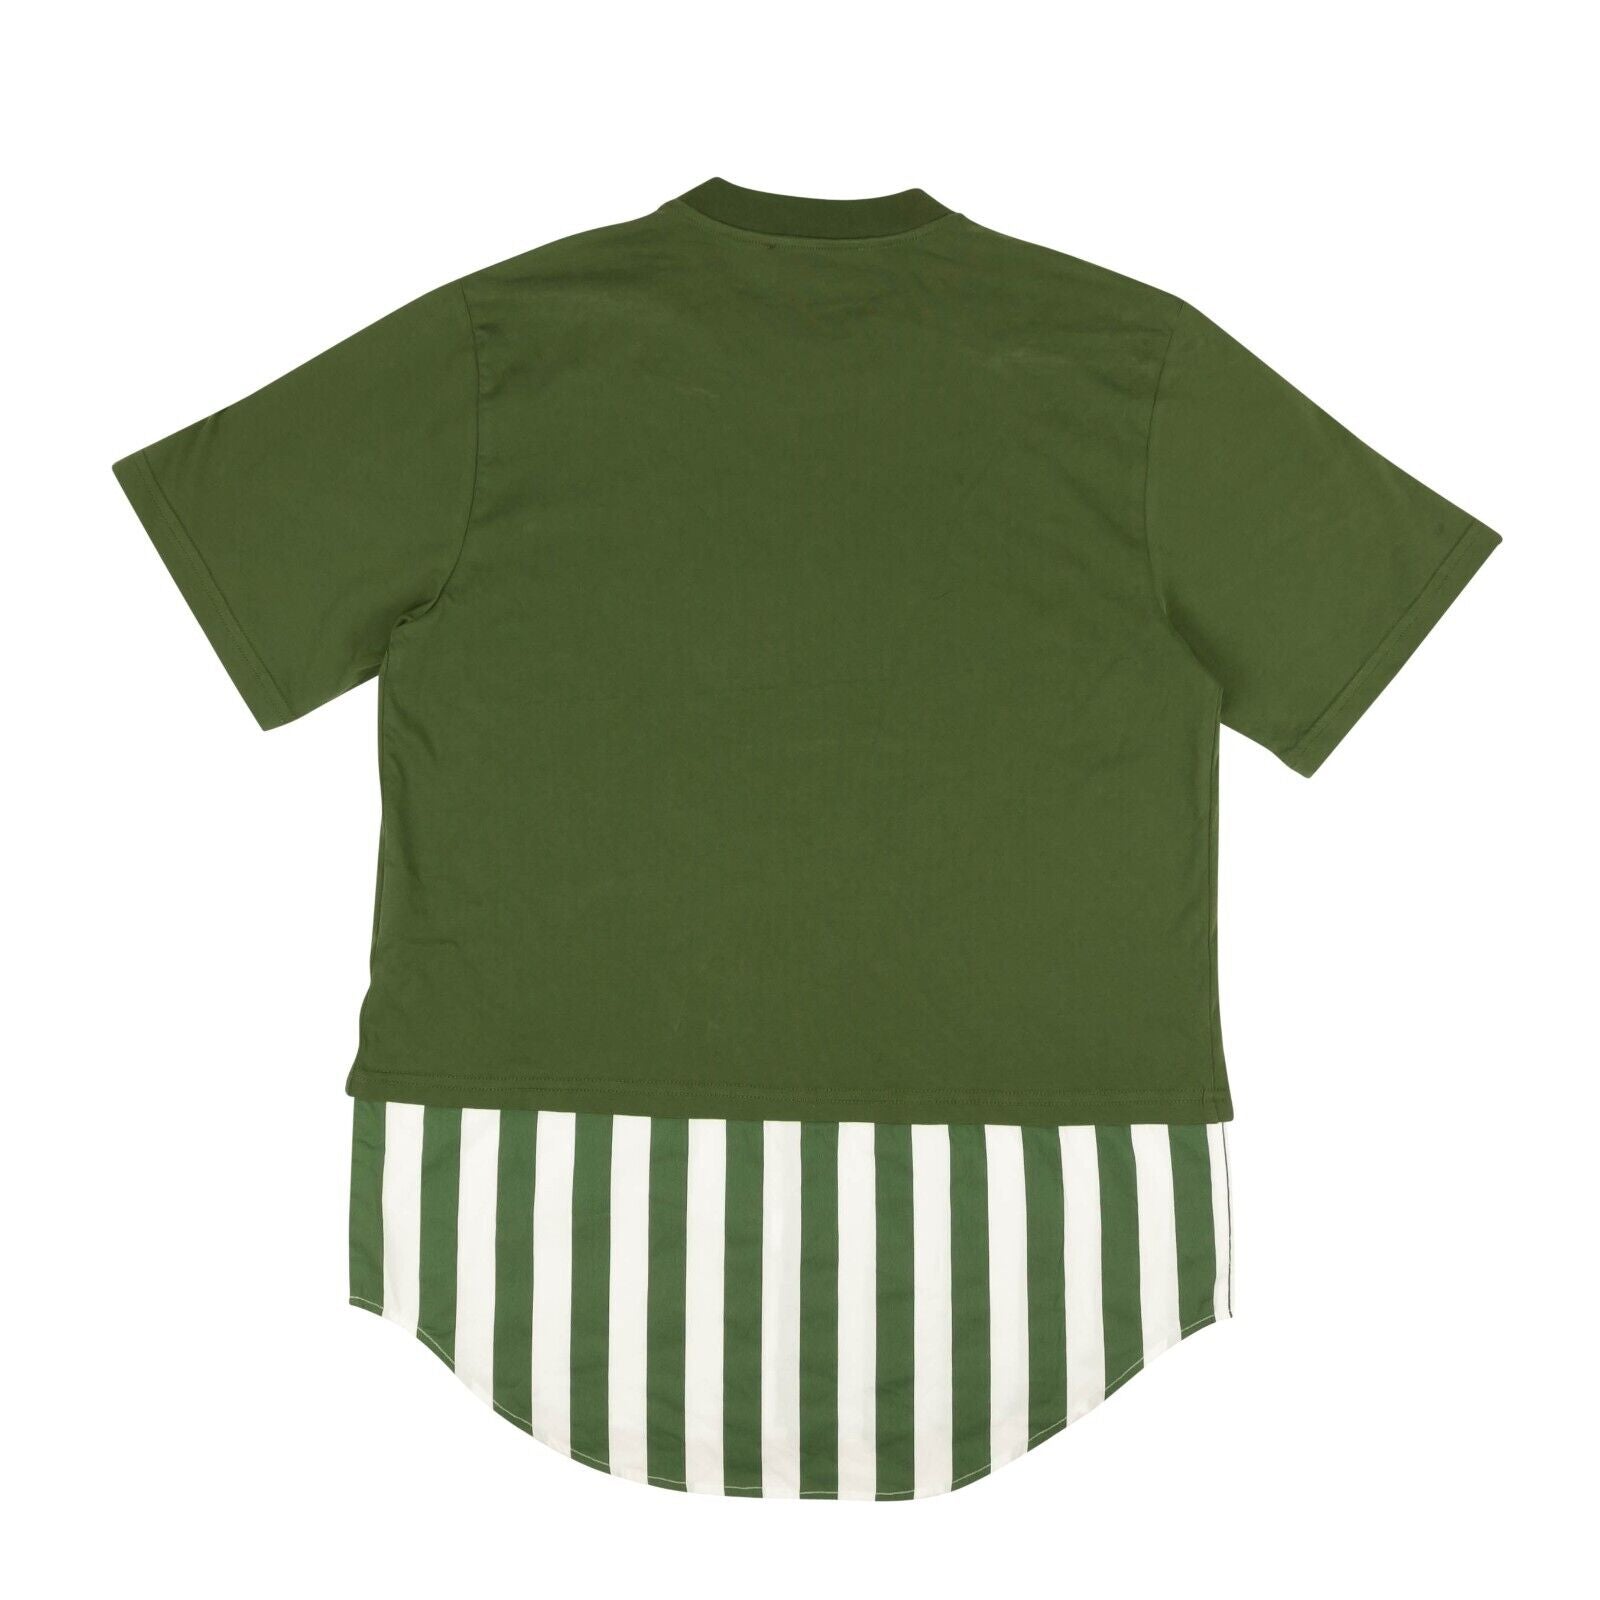 Sunnei Men's T-shirts - Green/white